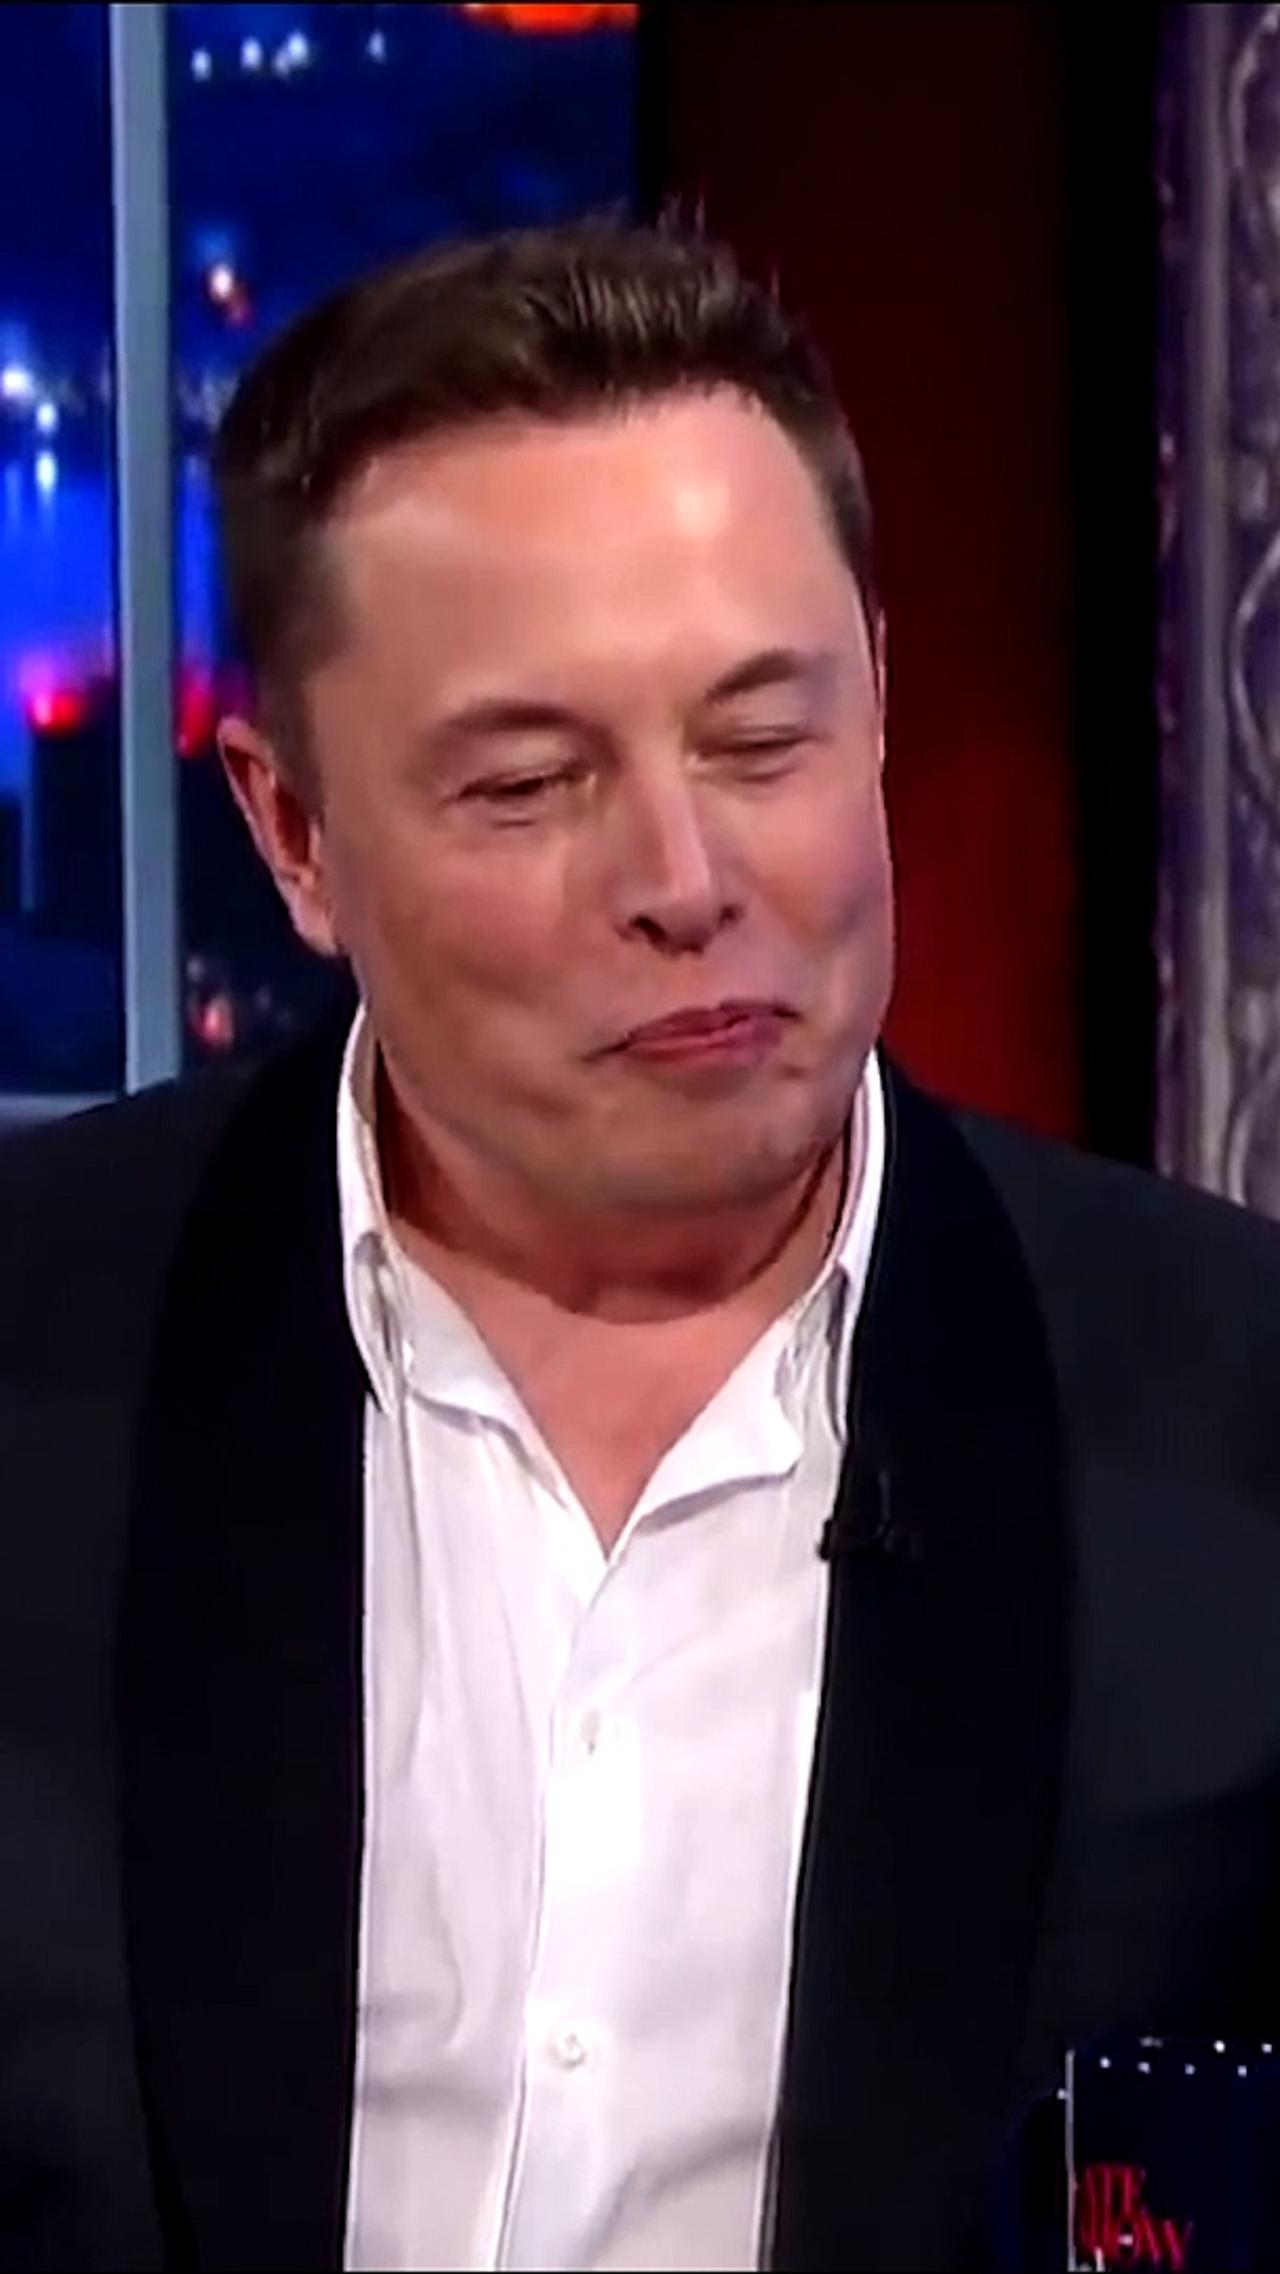 Elon Musk Confirms Having Secret Twins With Executive